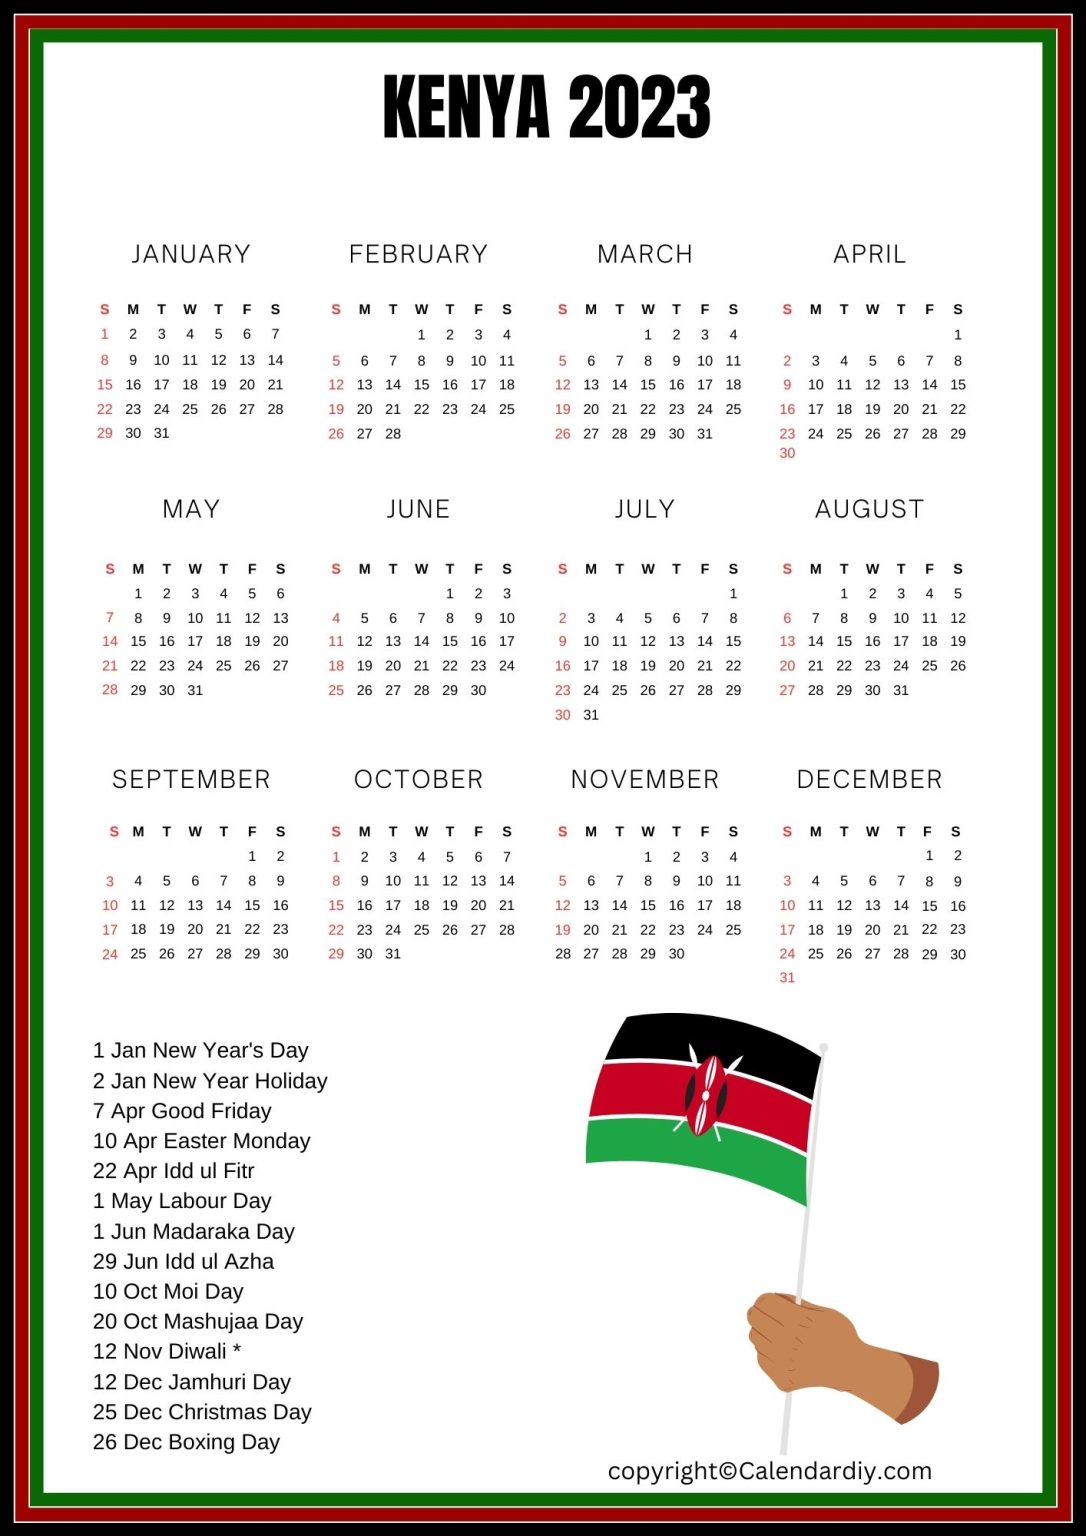 Kenya Calendar 2023 with Kenya Public Holidays